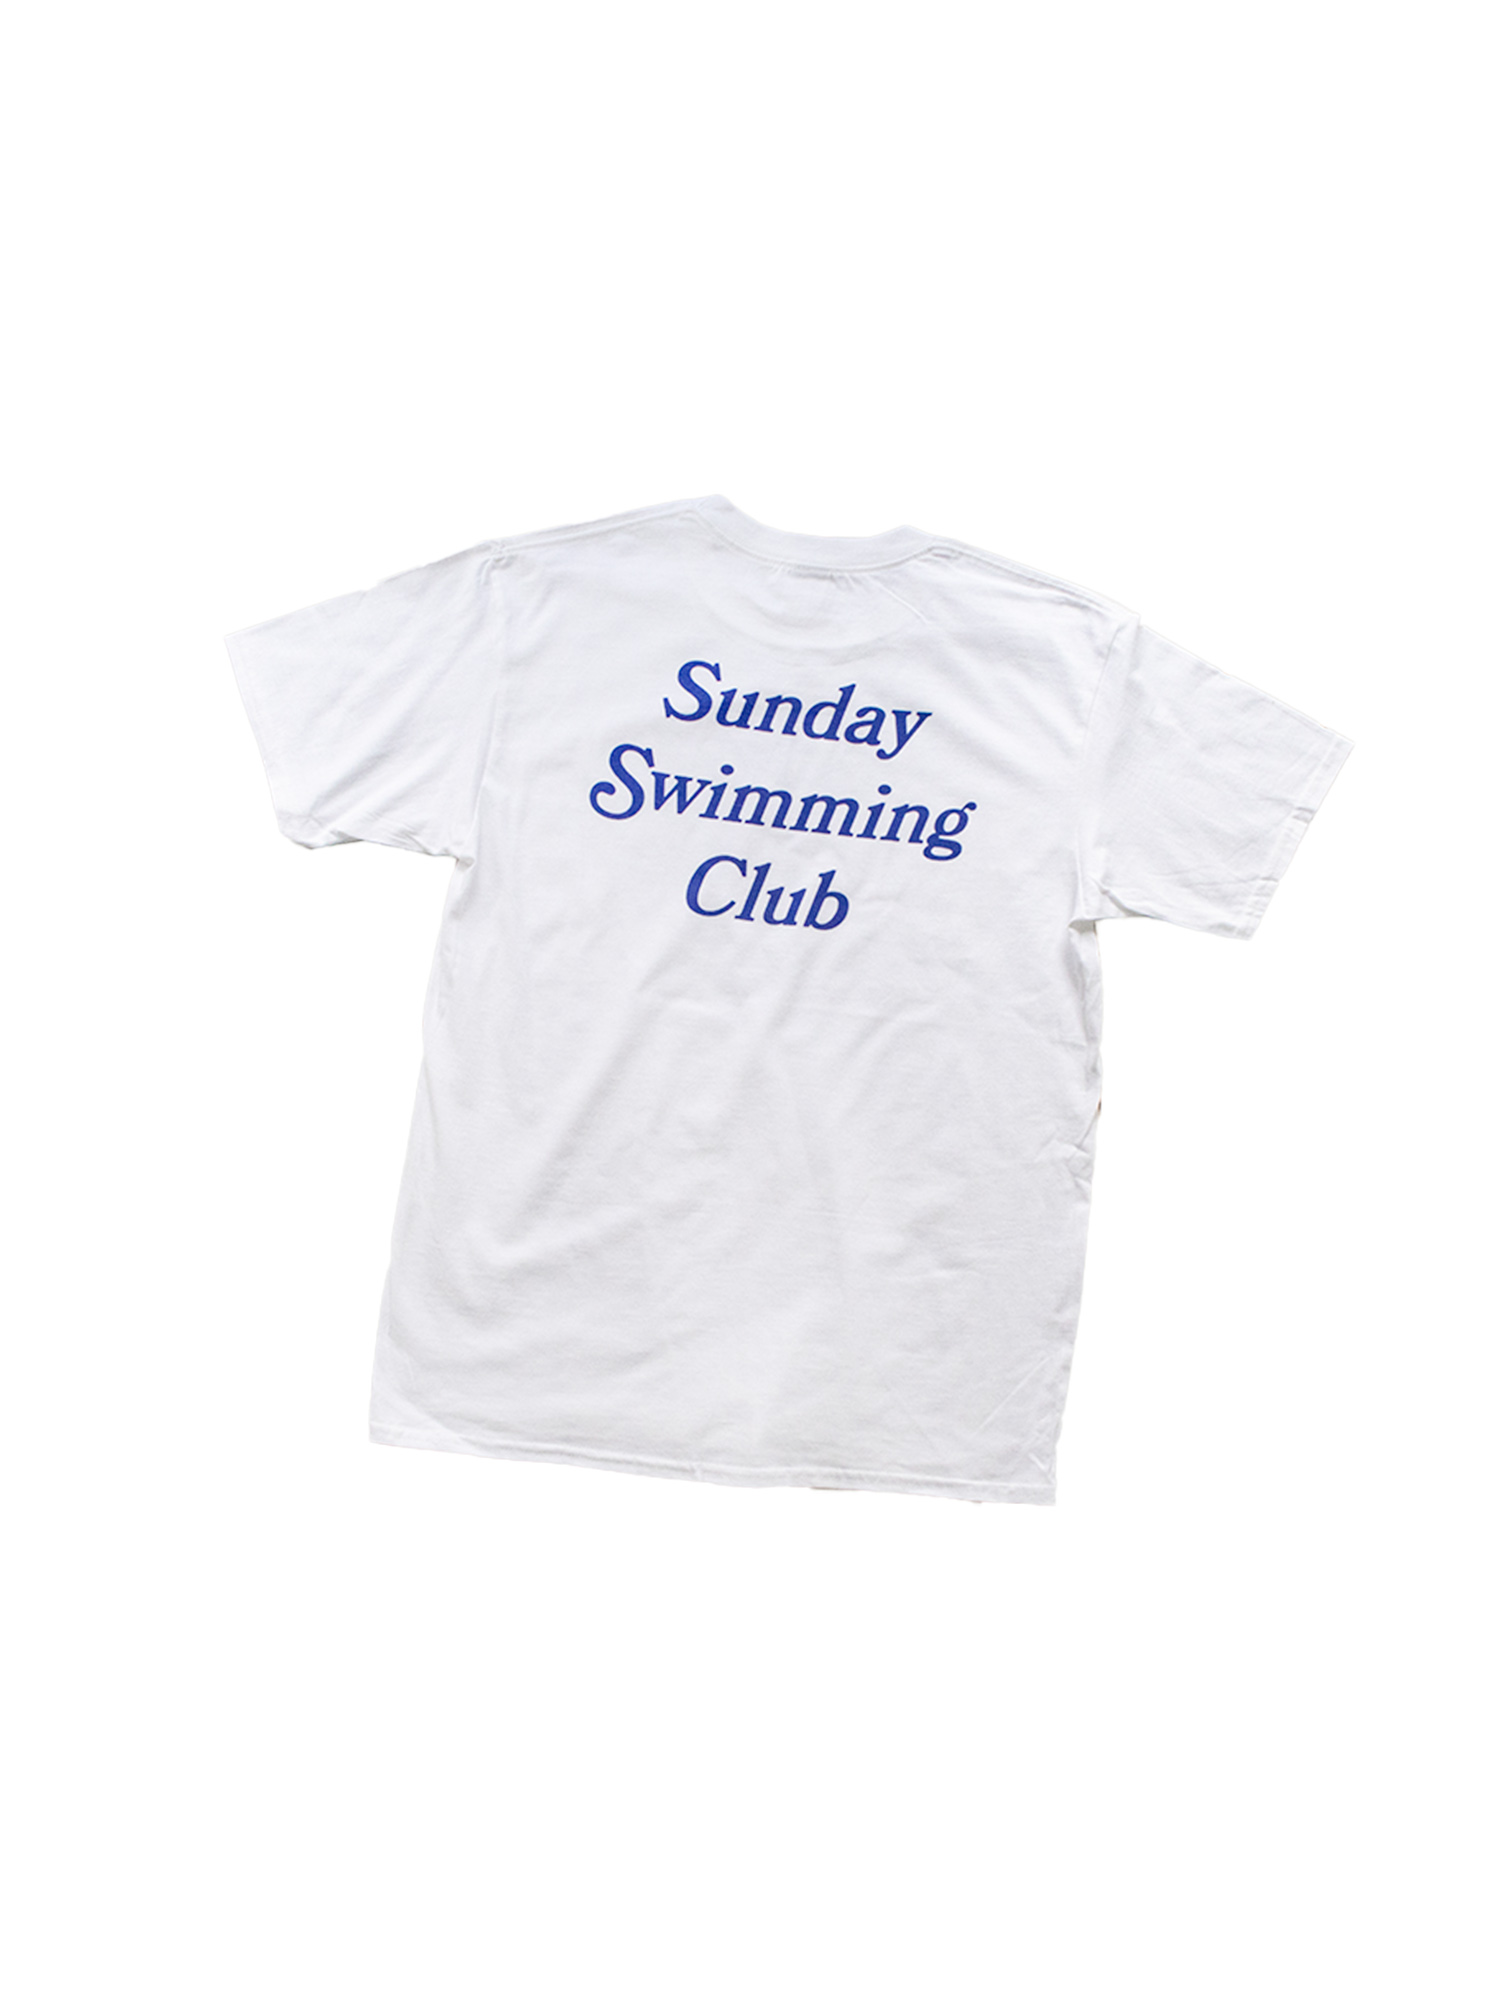 Sunday Swimming Club Tee - Human